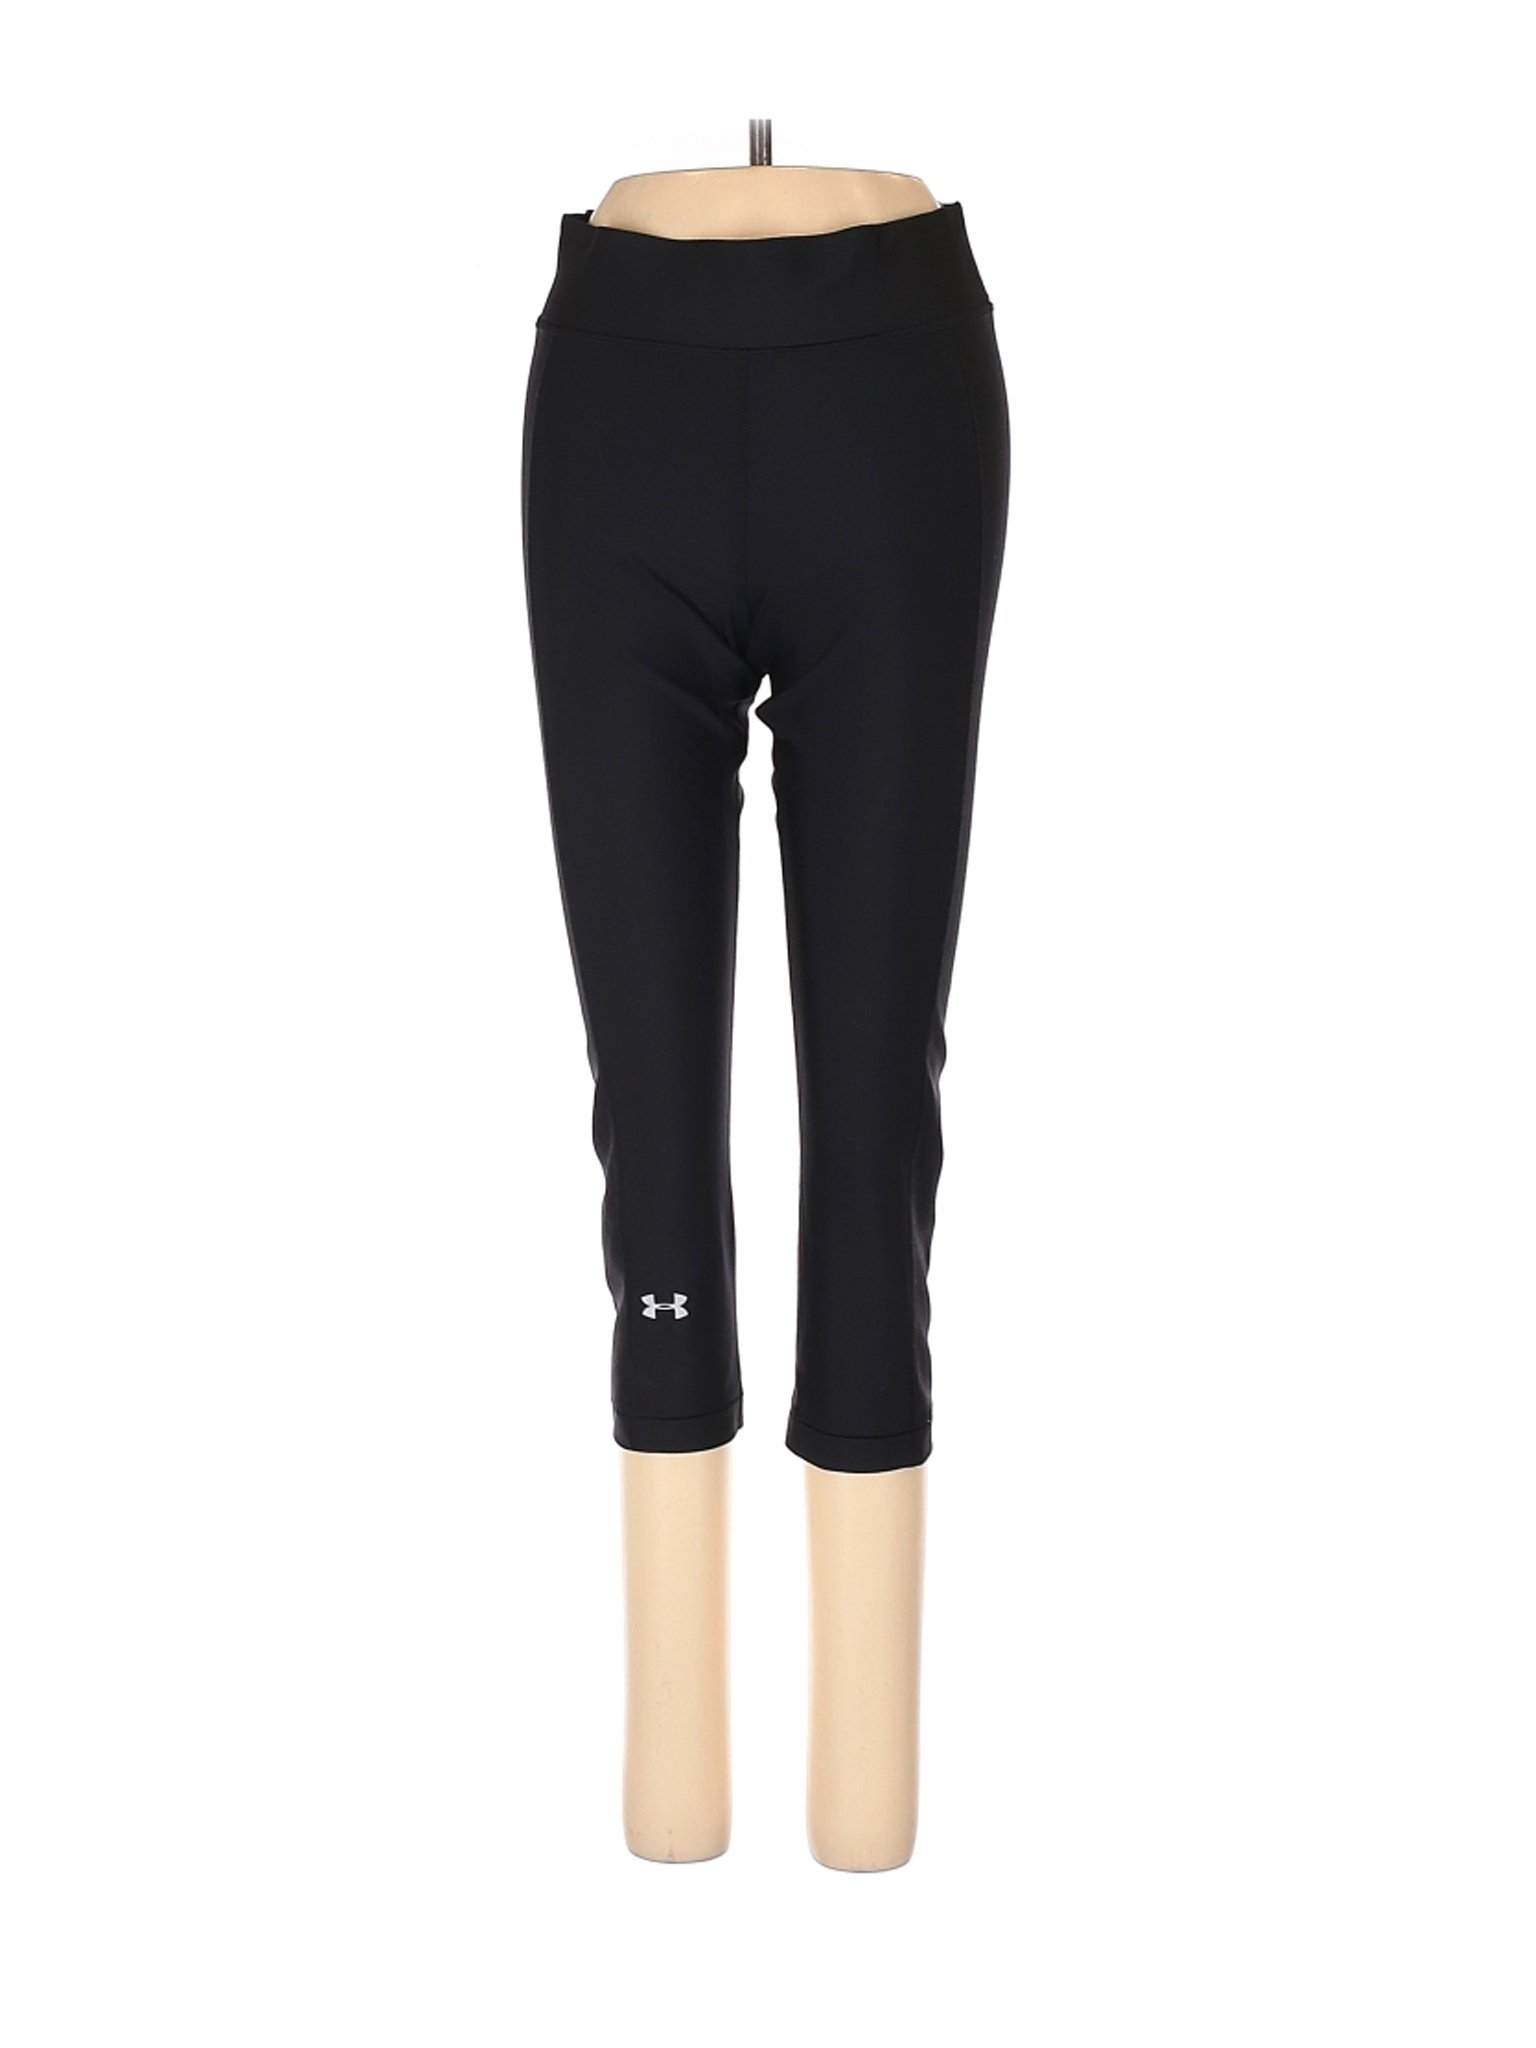 Heat Gear by Under Armour Women Black Active Pants S | eBay